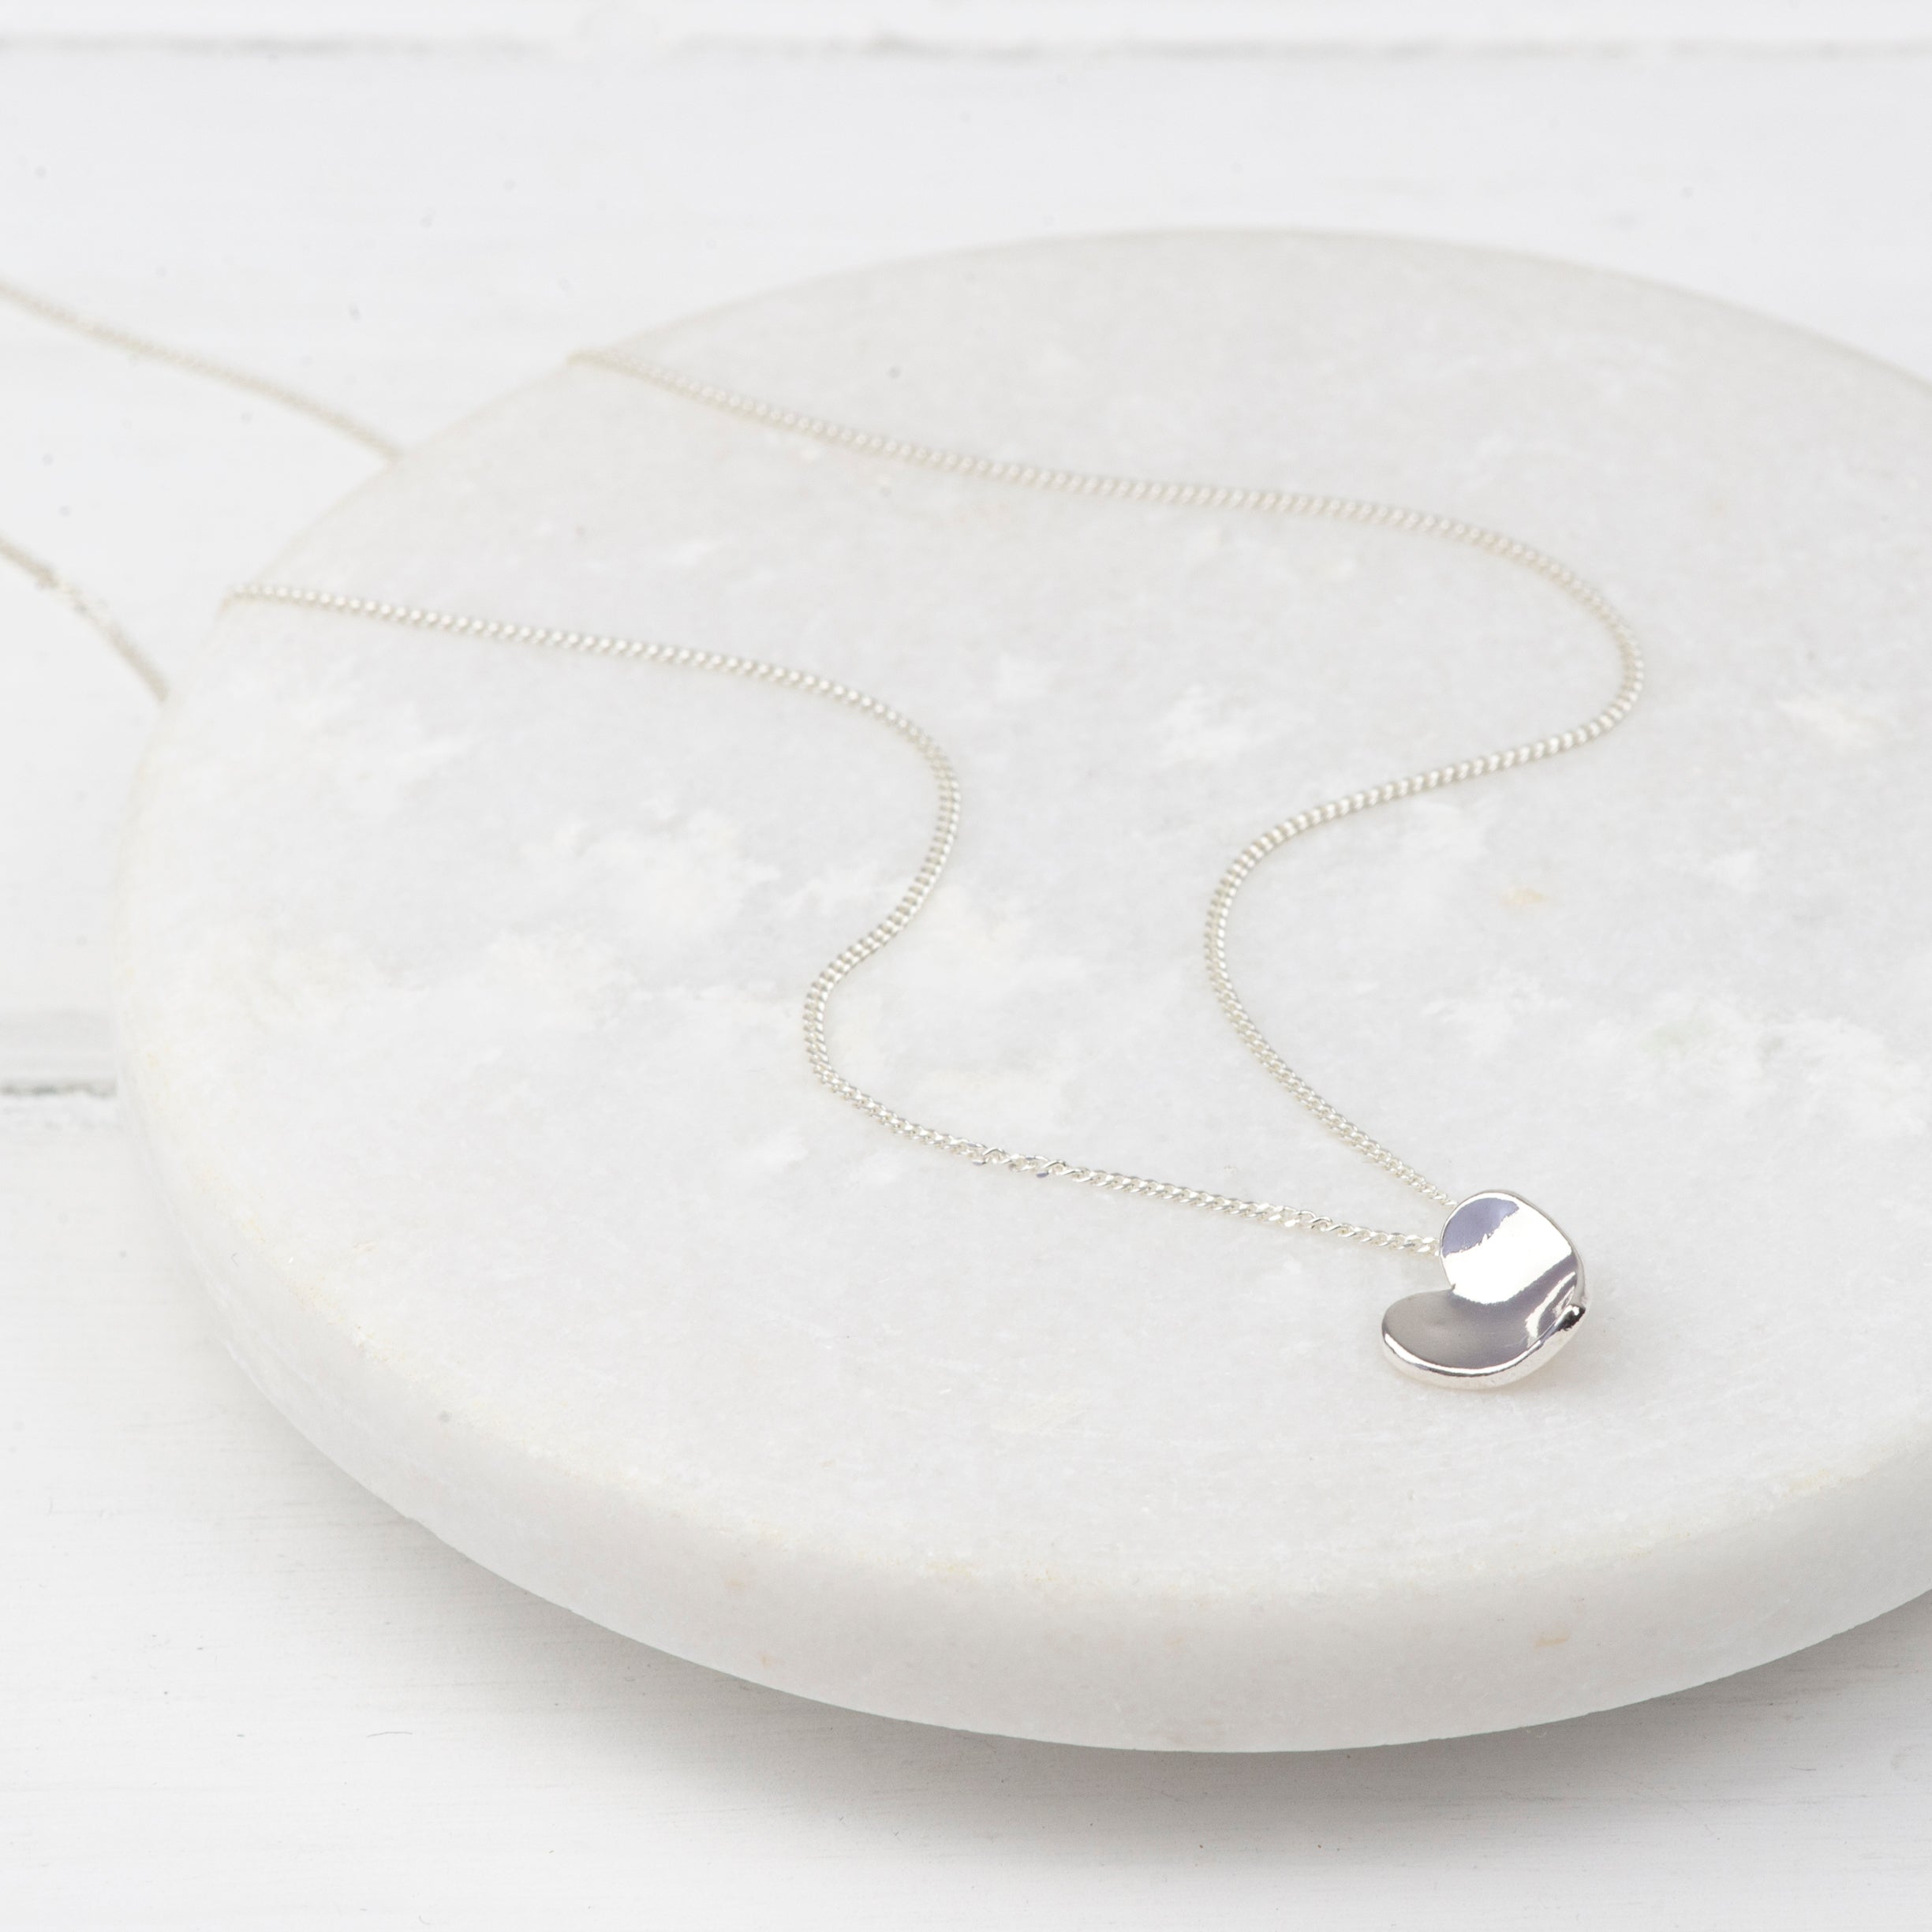 Silver heart pendant on a curb chain